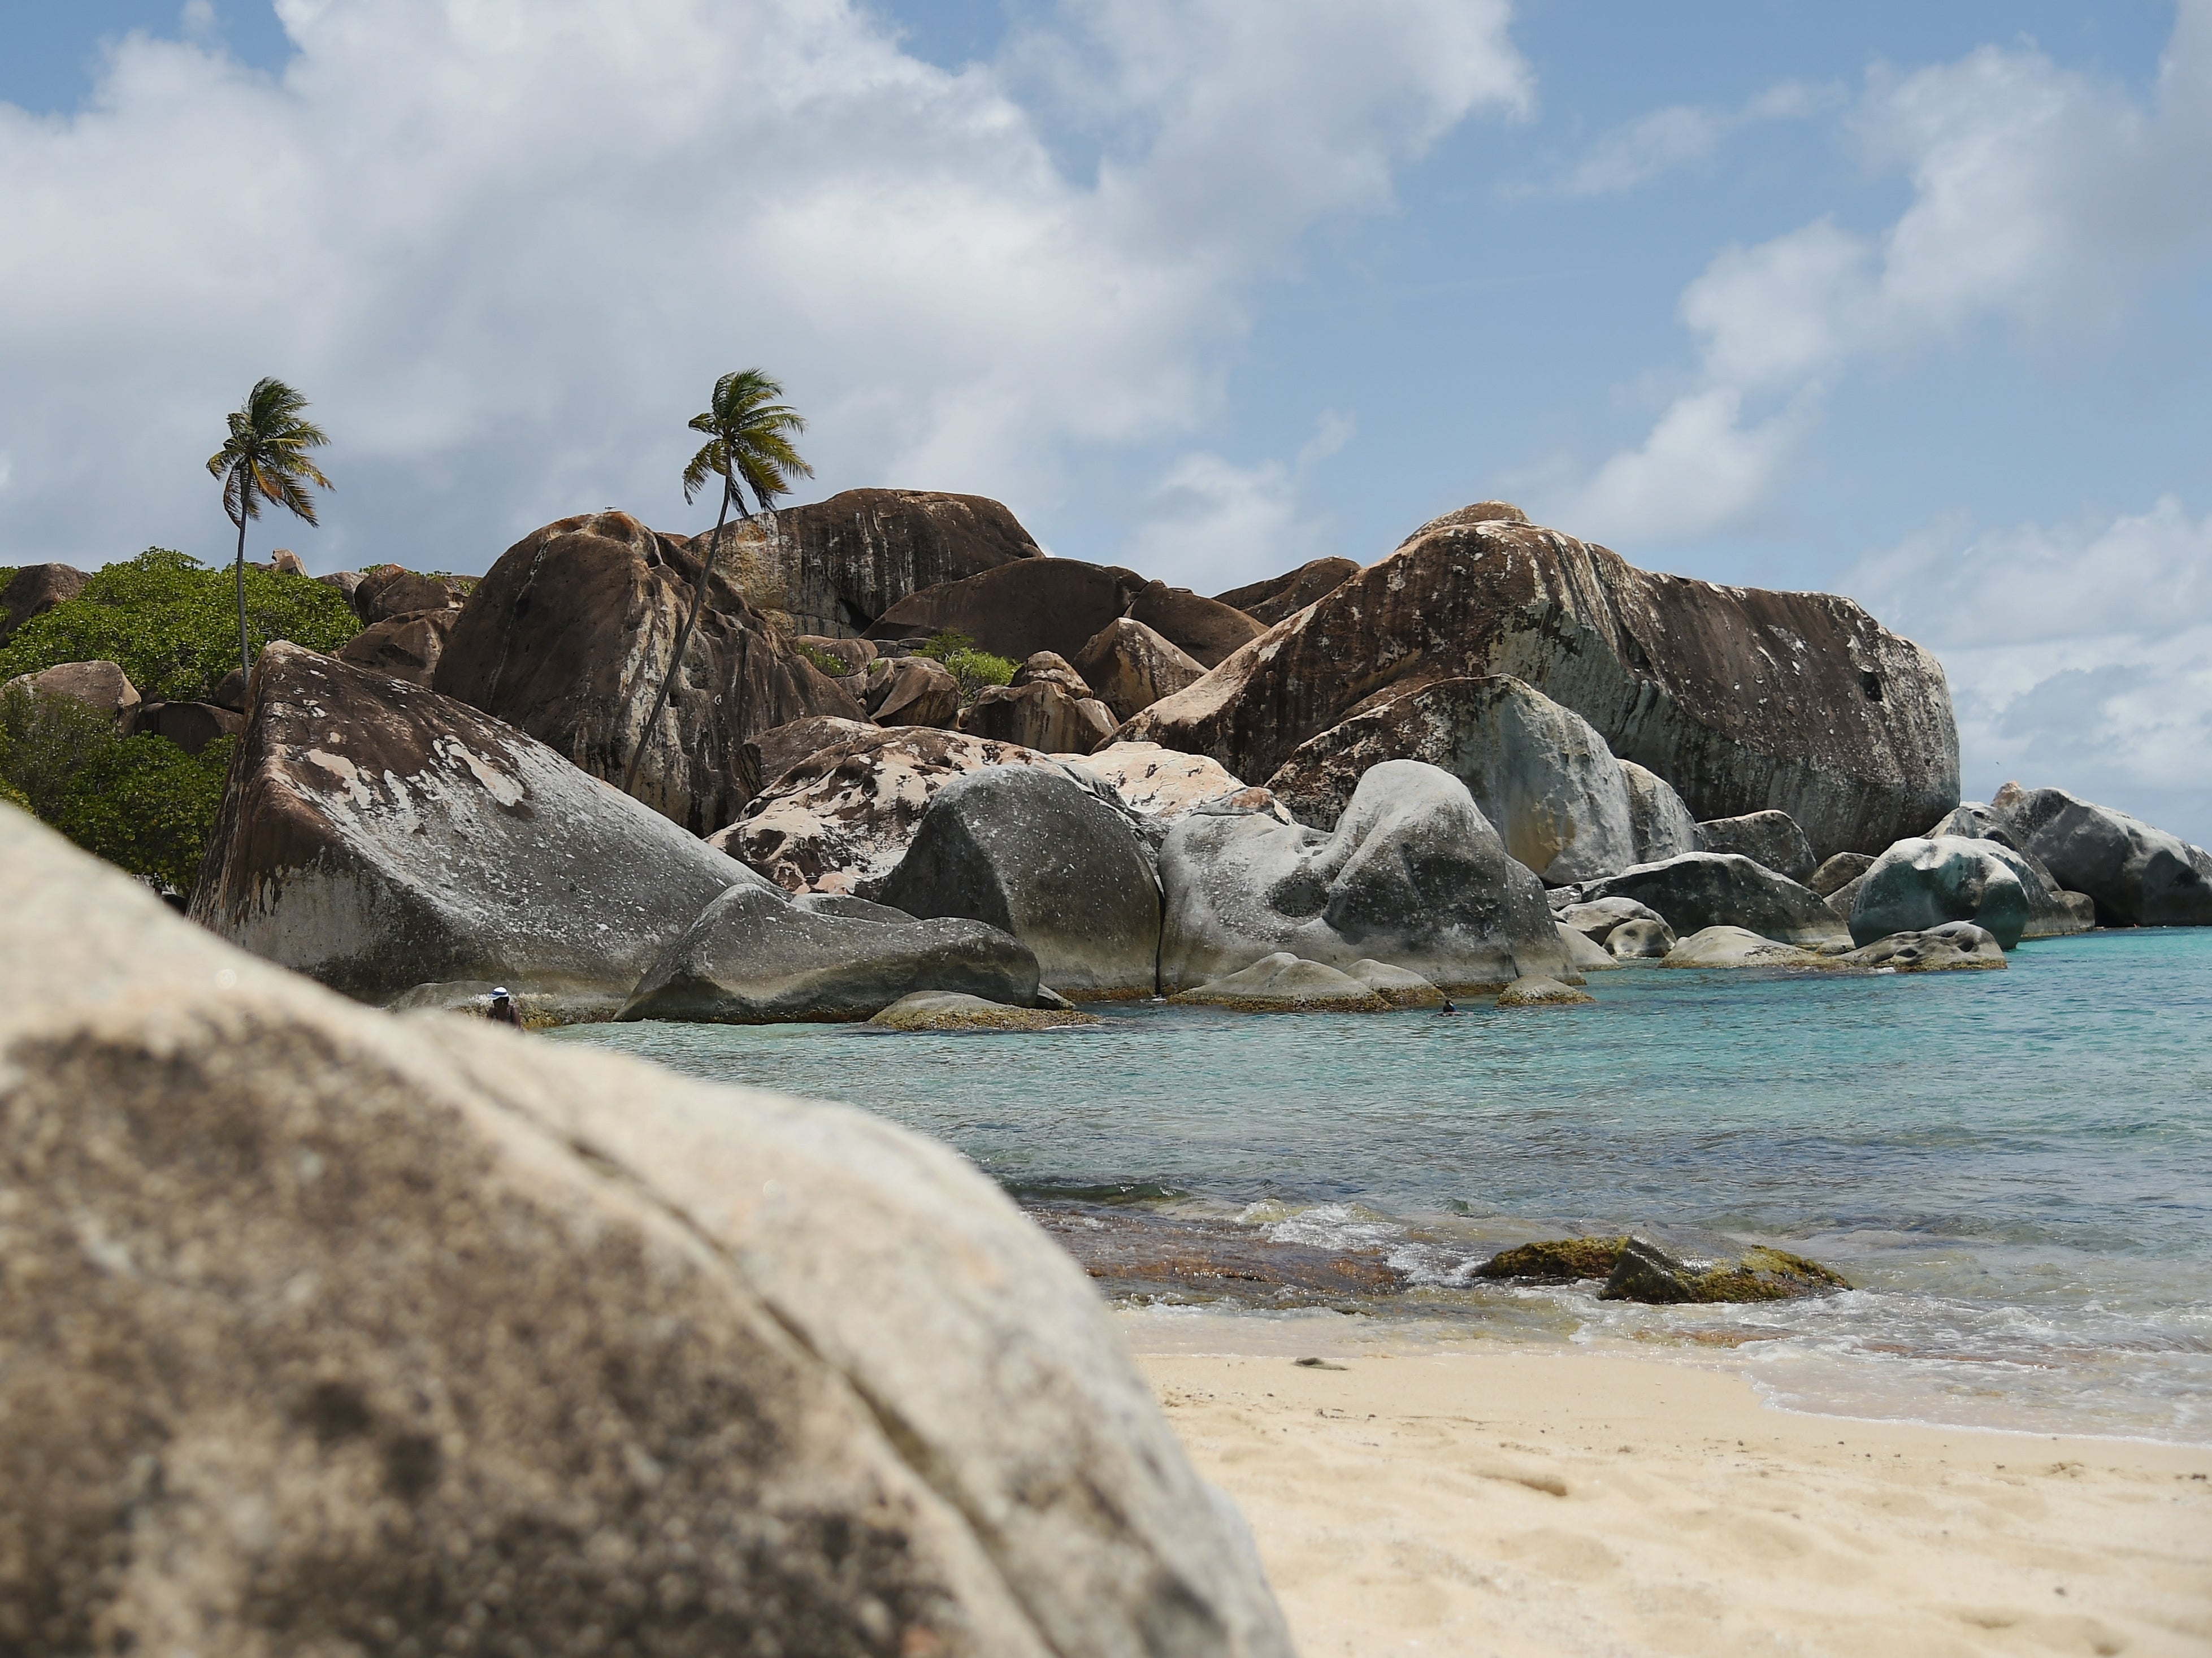 Virgin Gorda, the second-most populous island in the British Virgin Islands